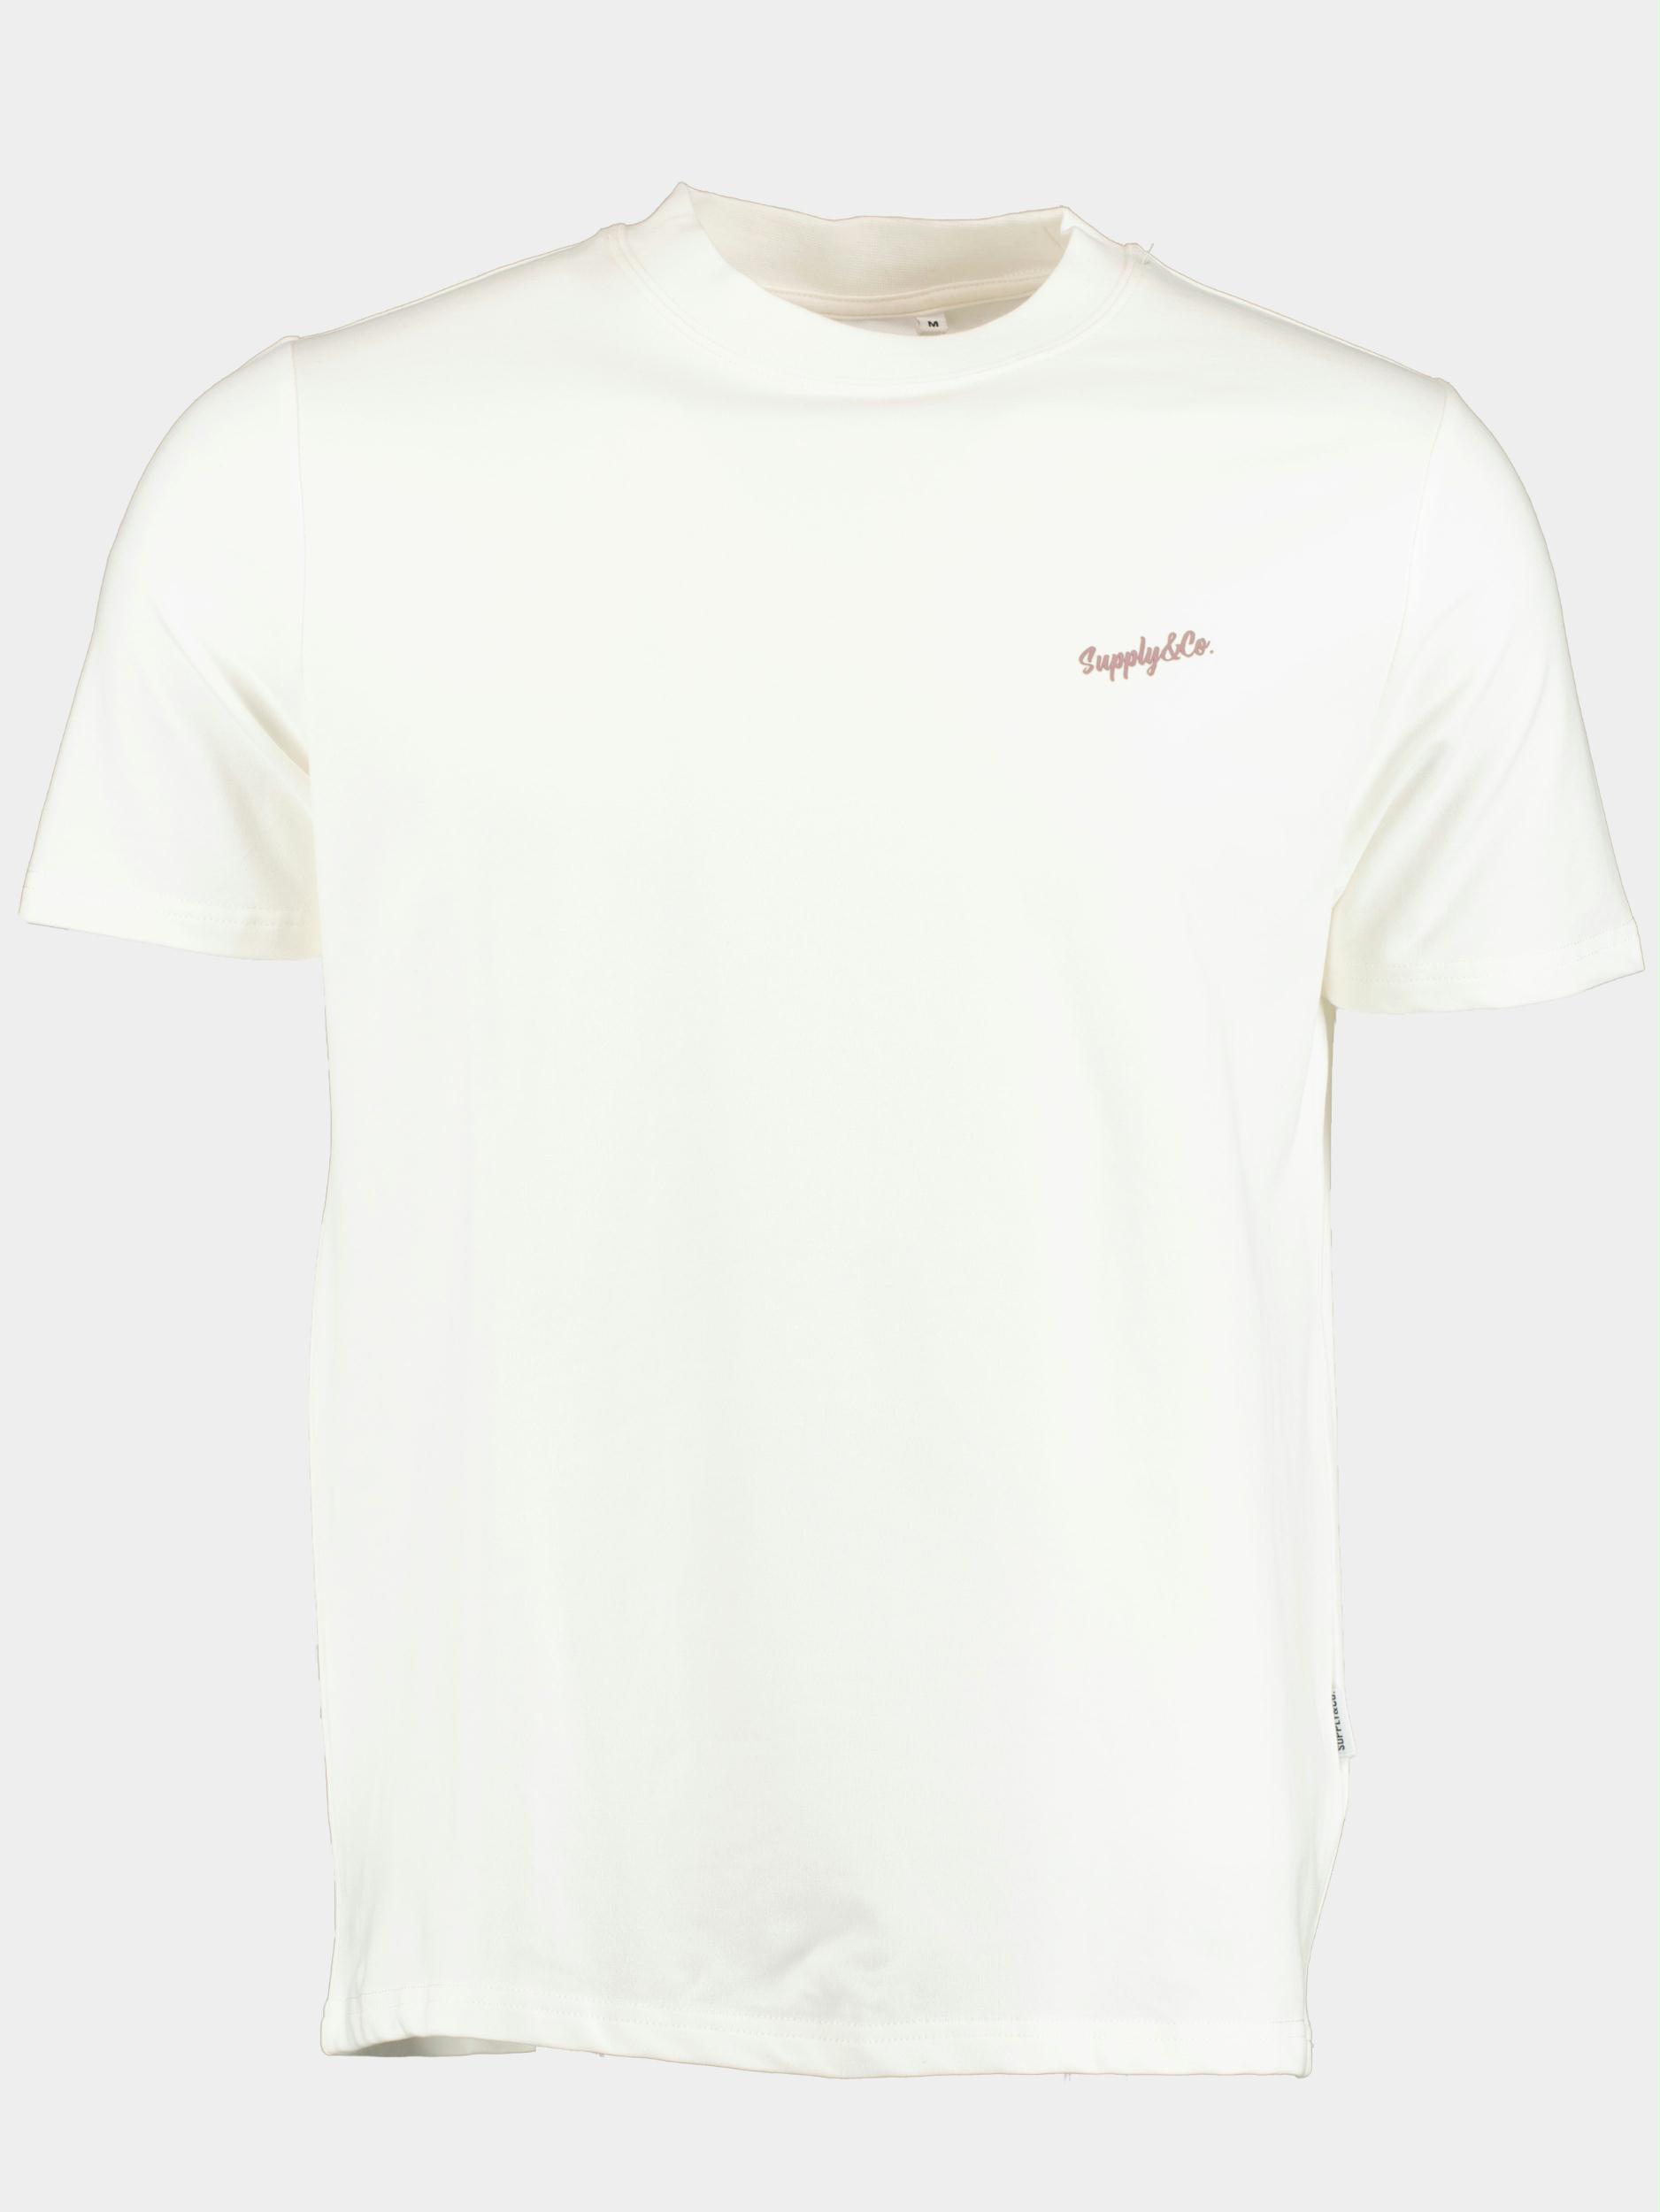 Supply & Co. T-shirt korte mouw Beige Basic Tee With Chestlogo 23108BA07/150 off-white